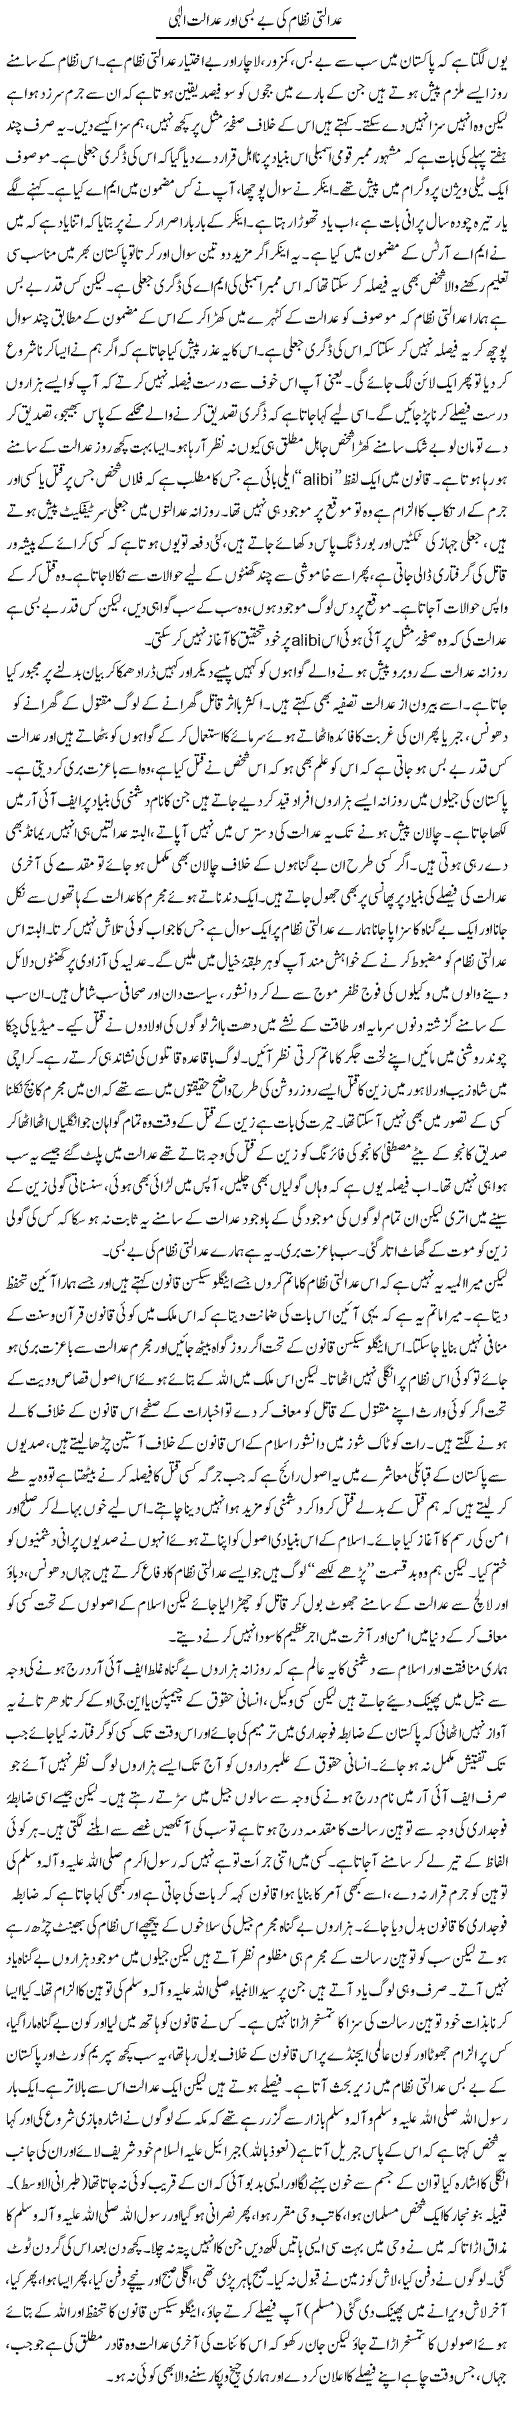 Adalti Nizam Ki Be Basi Aur Adalat Ilahi | Orya Maqbool Jan | Daily Urdu Columns